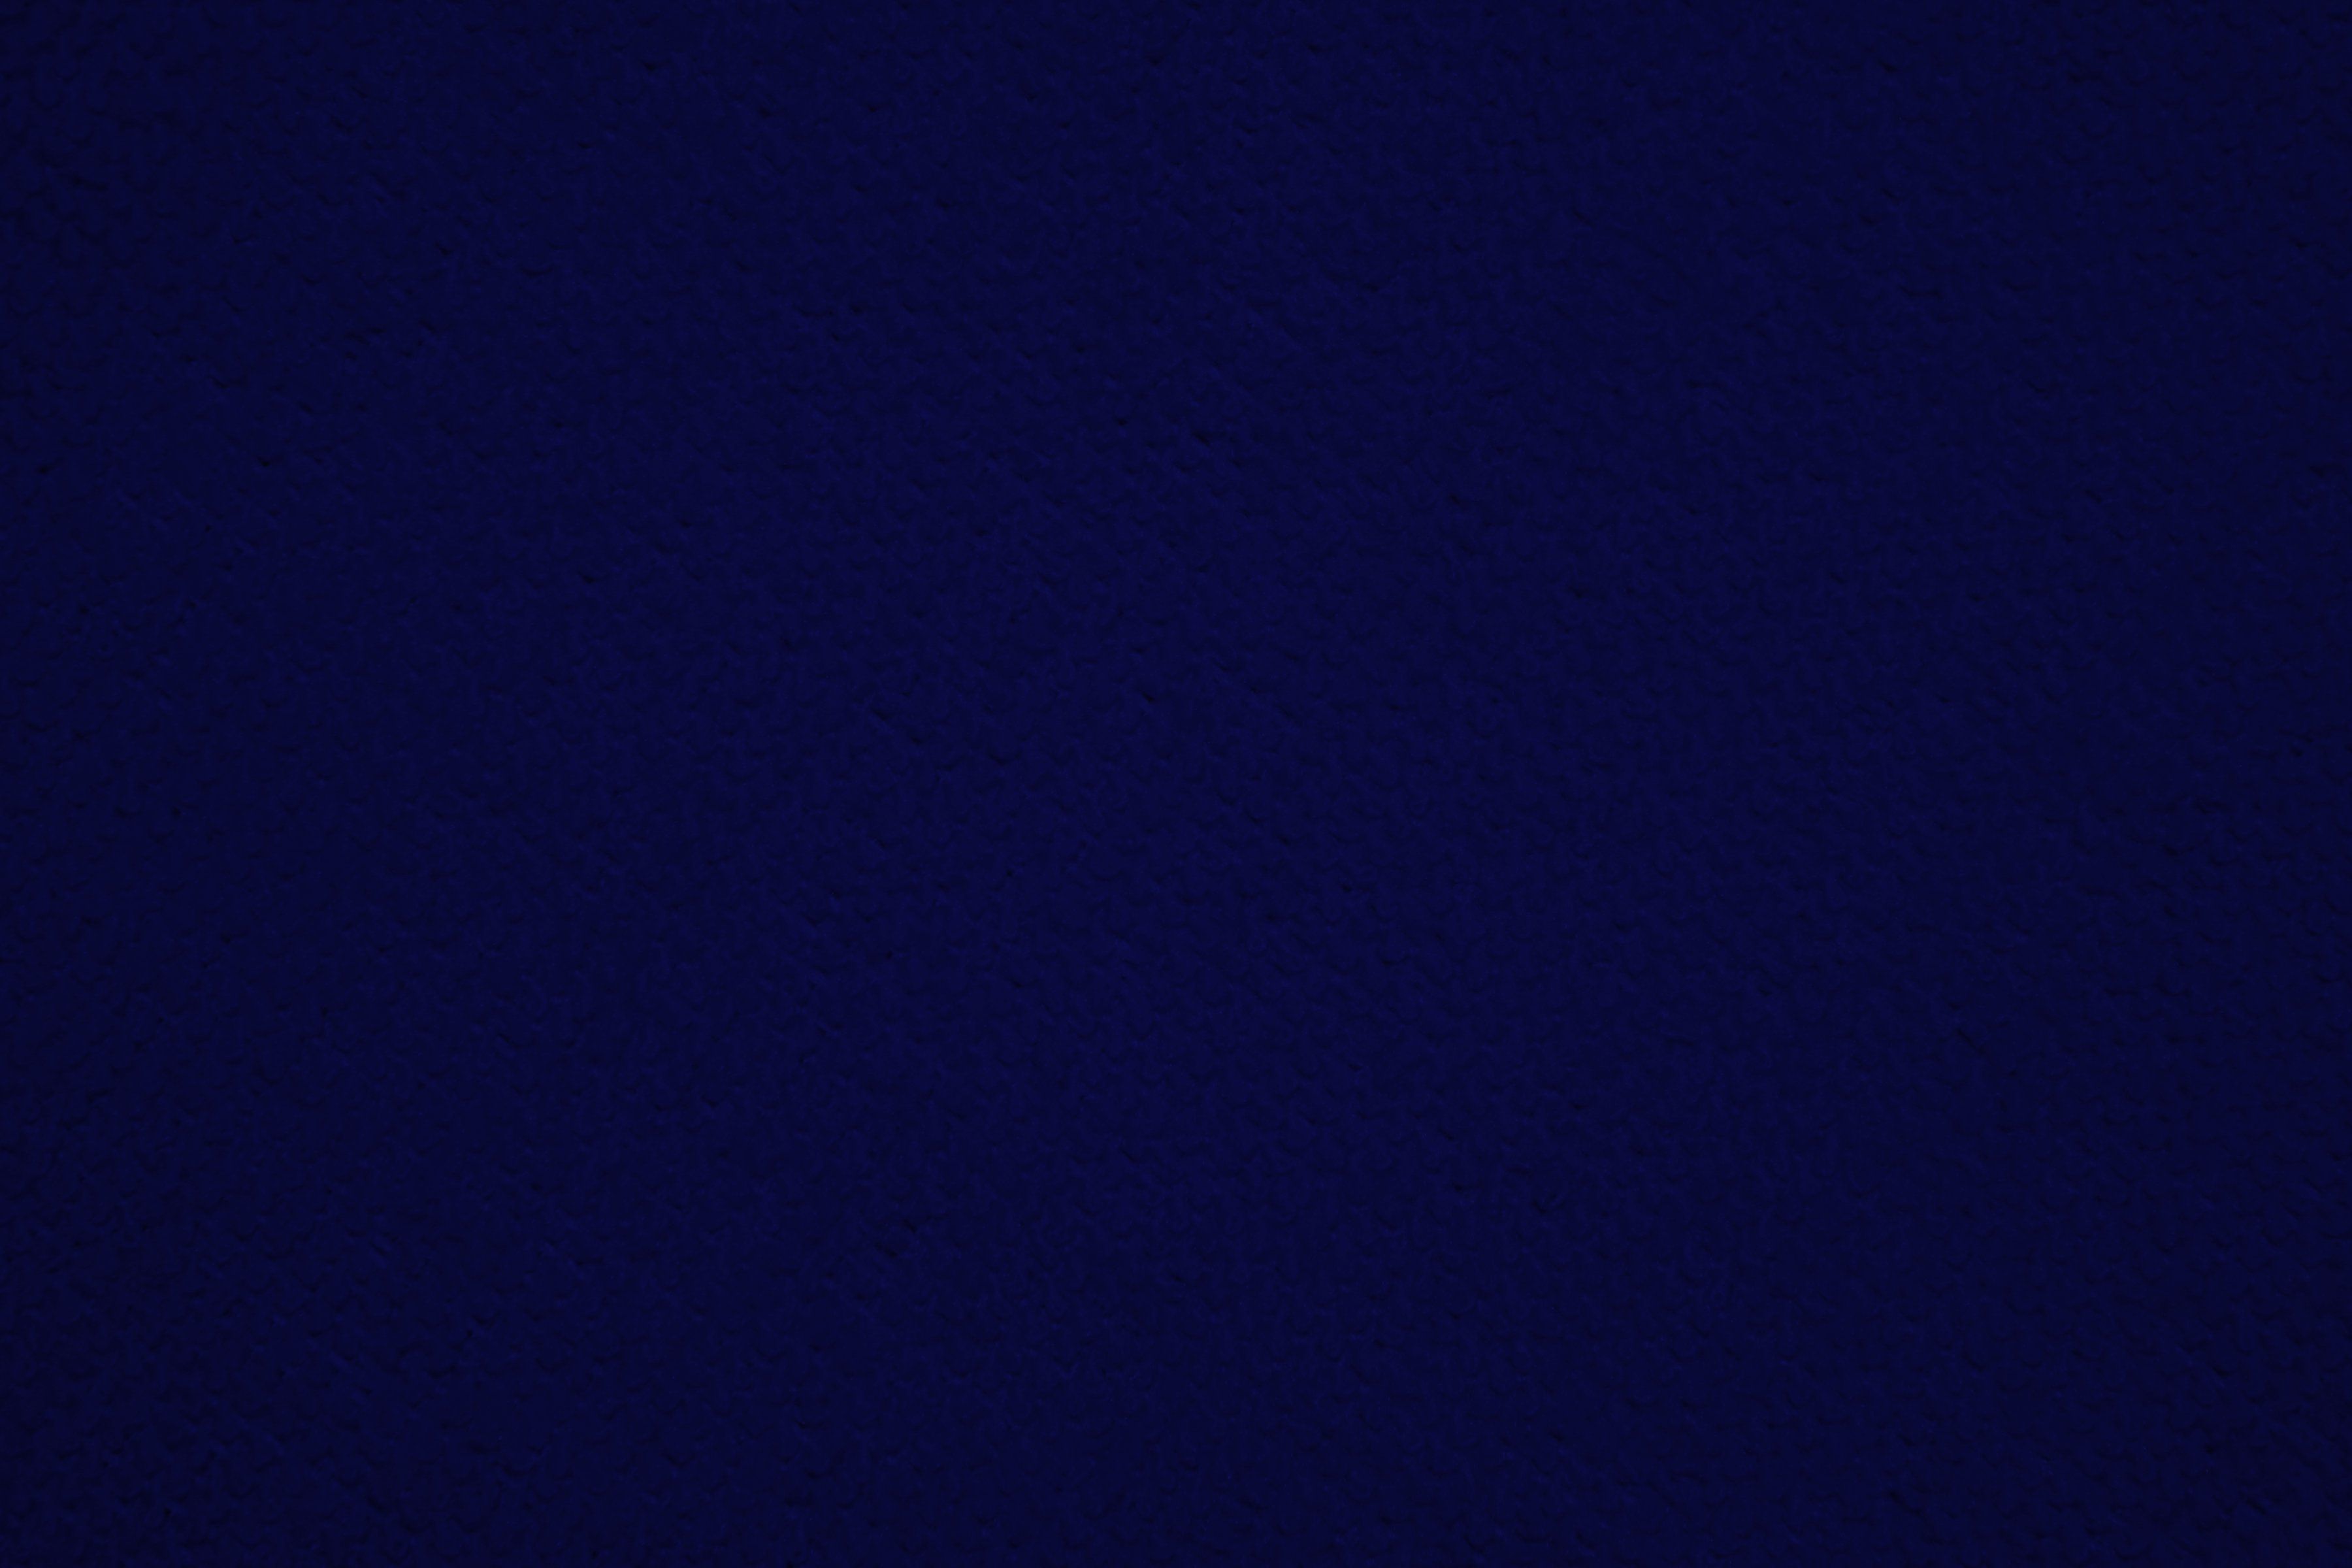 Dark Blue Wallpaper - Best Car 2015